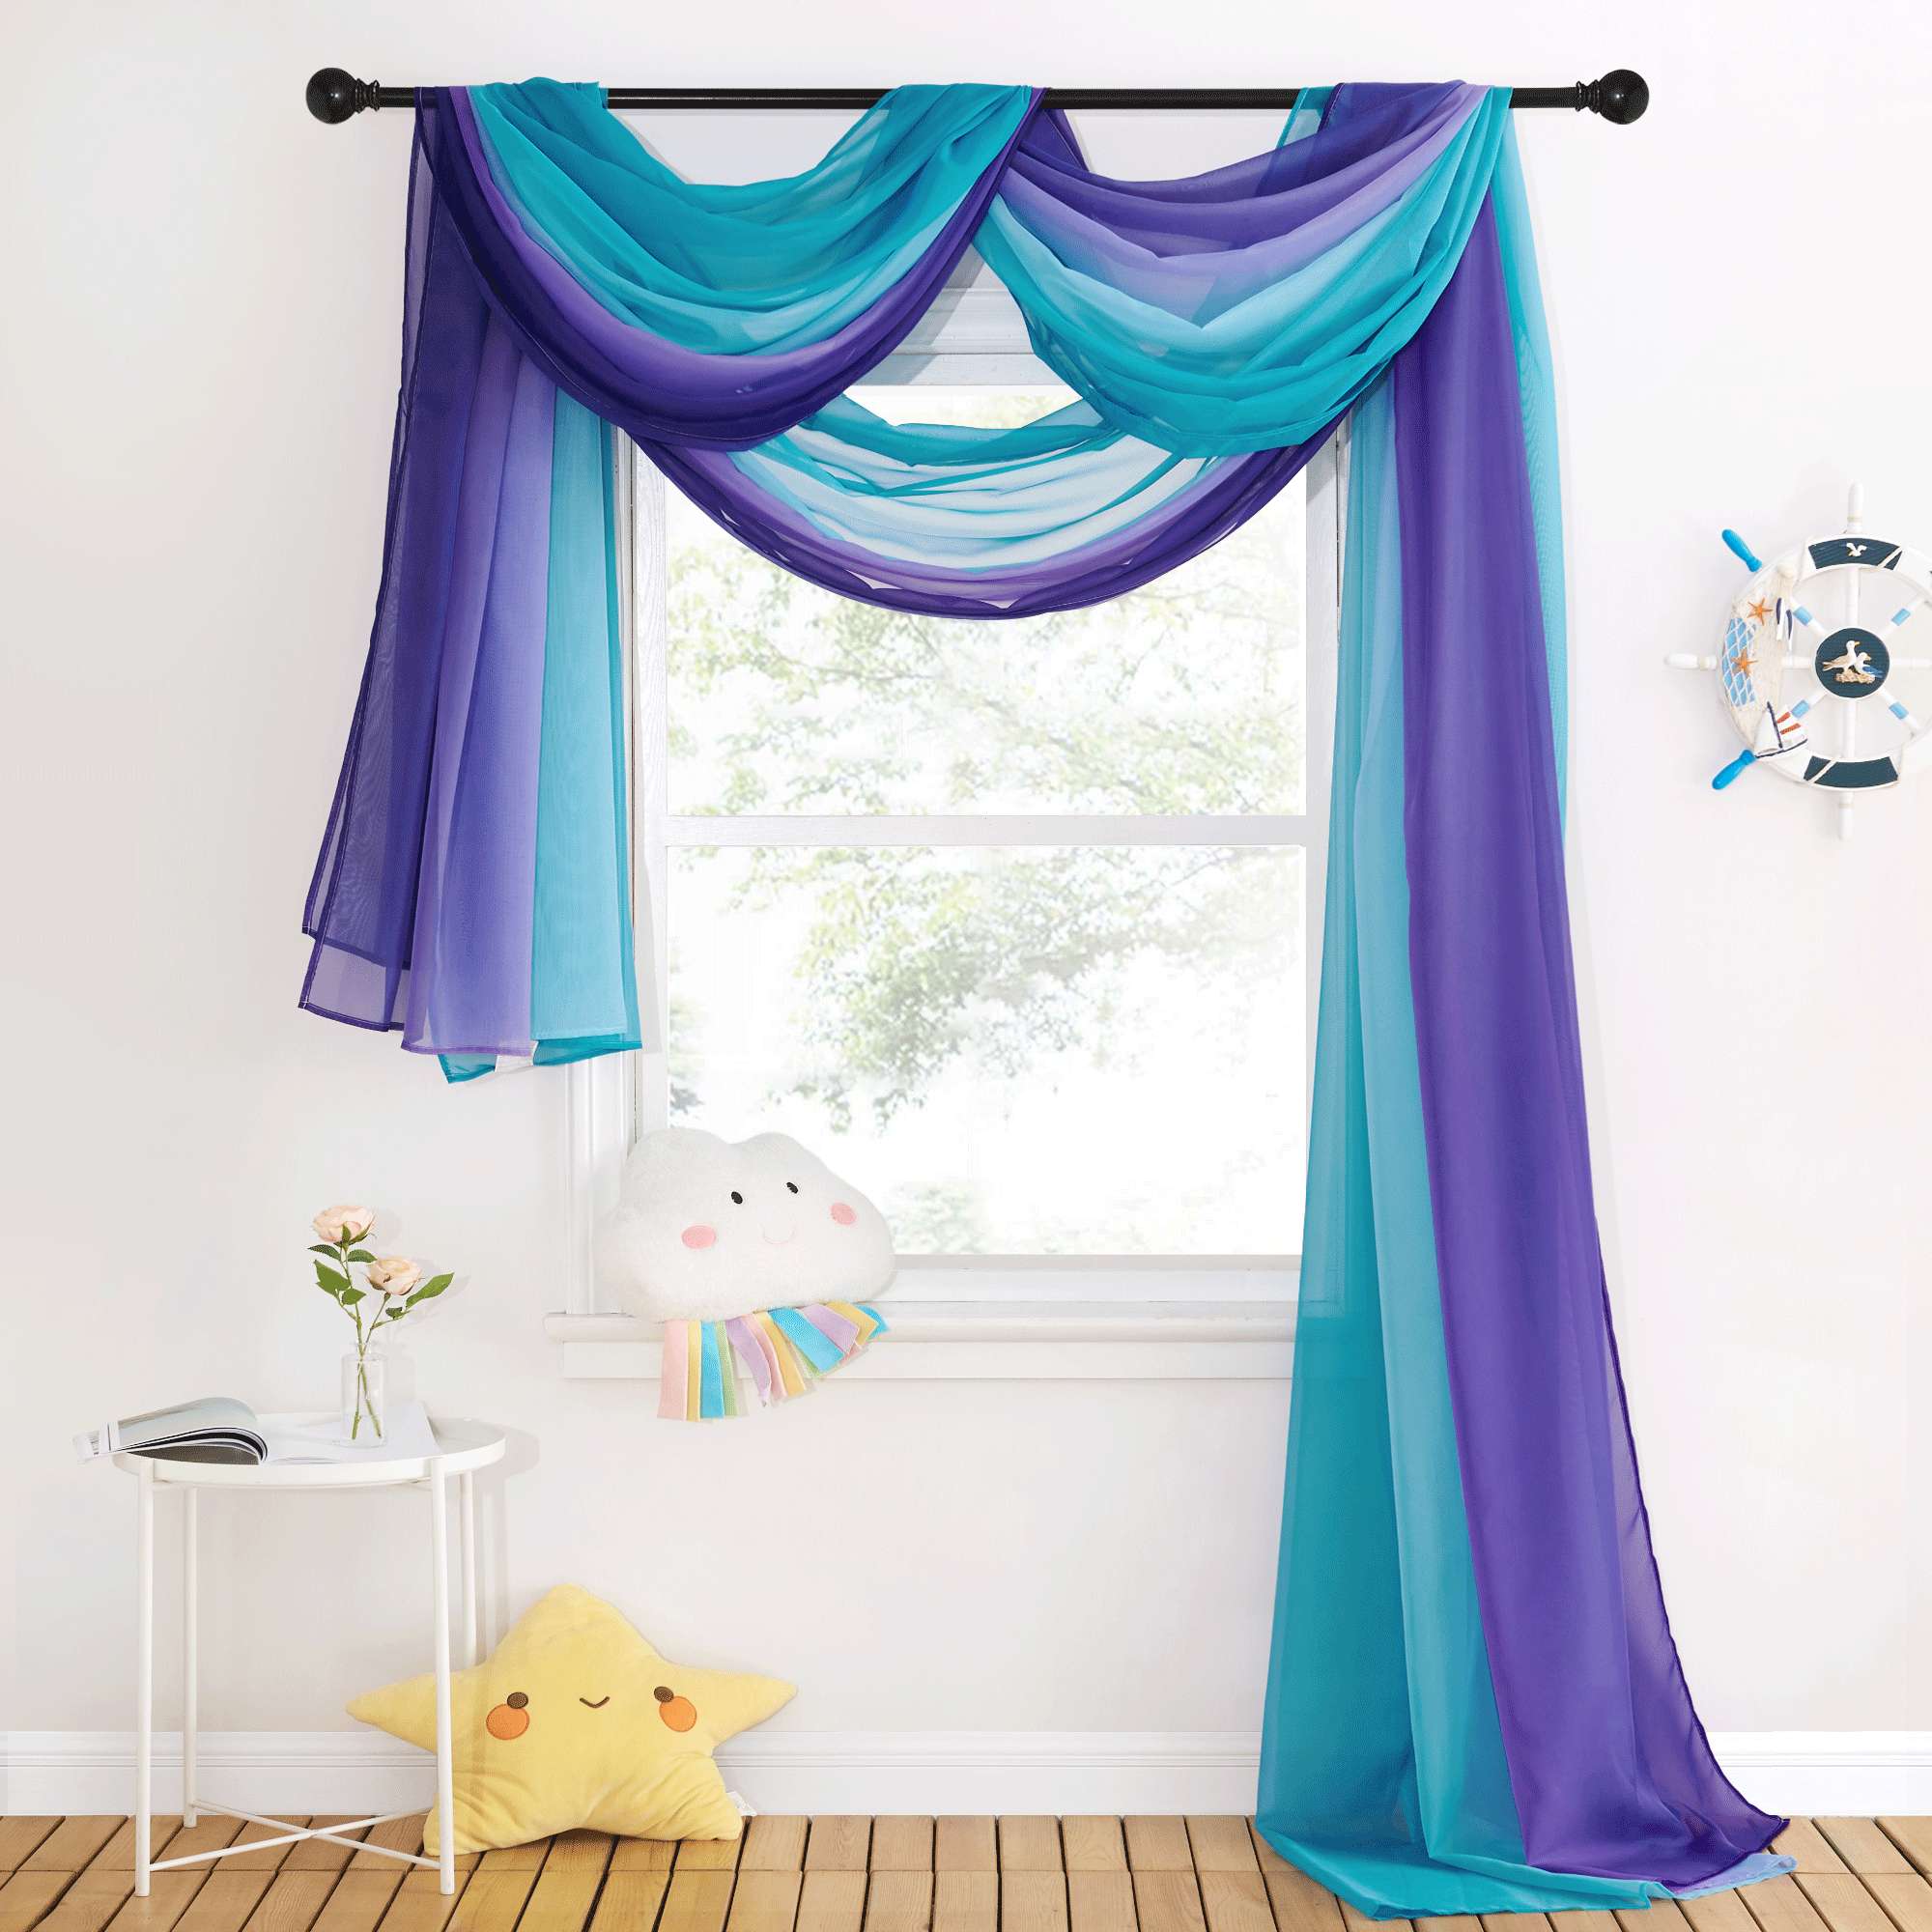 Home Decorative Rainbow Window Scarf Sheer Curtain-W60 x L216